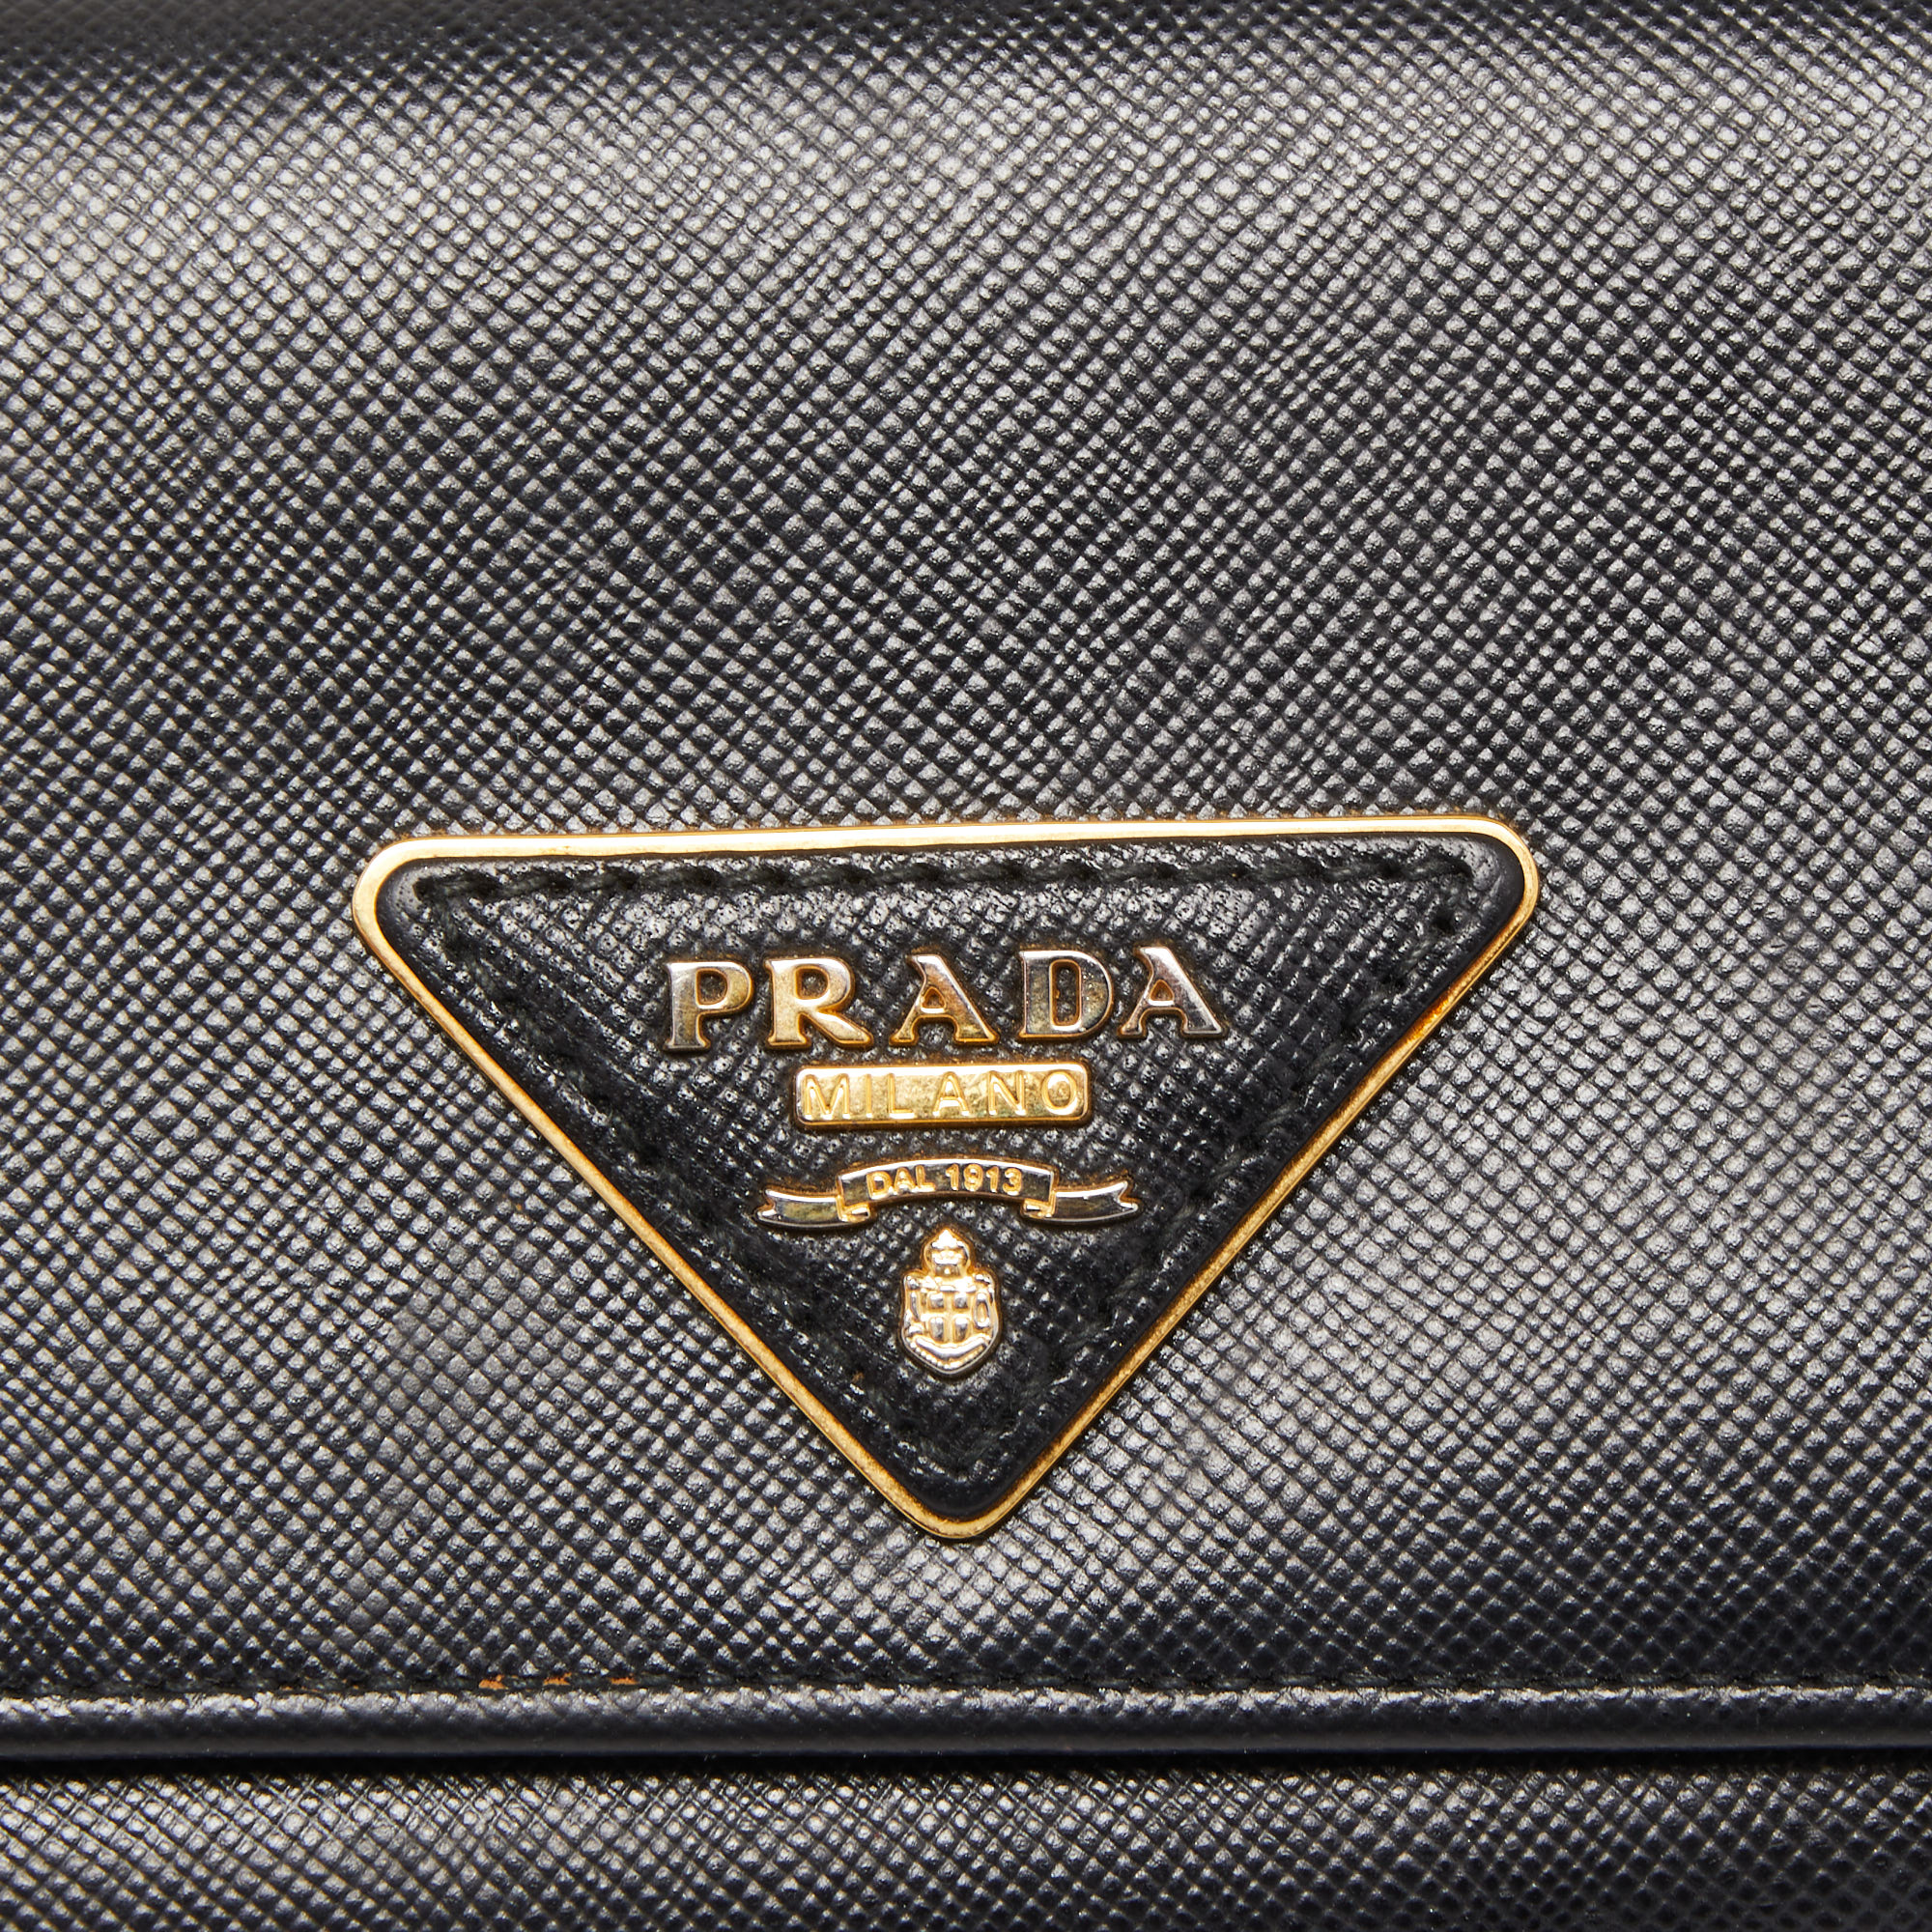 Prada Black Saffiano Lux Leather Flap Continental Wallet